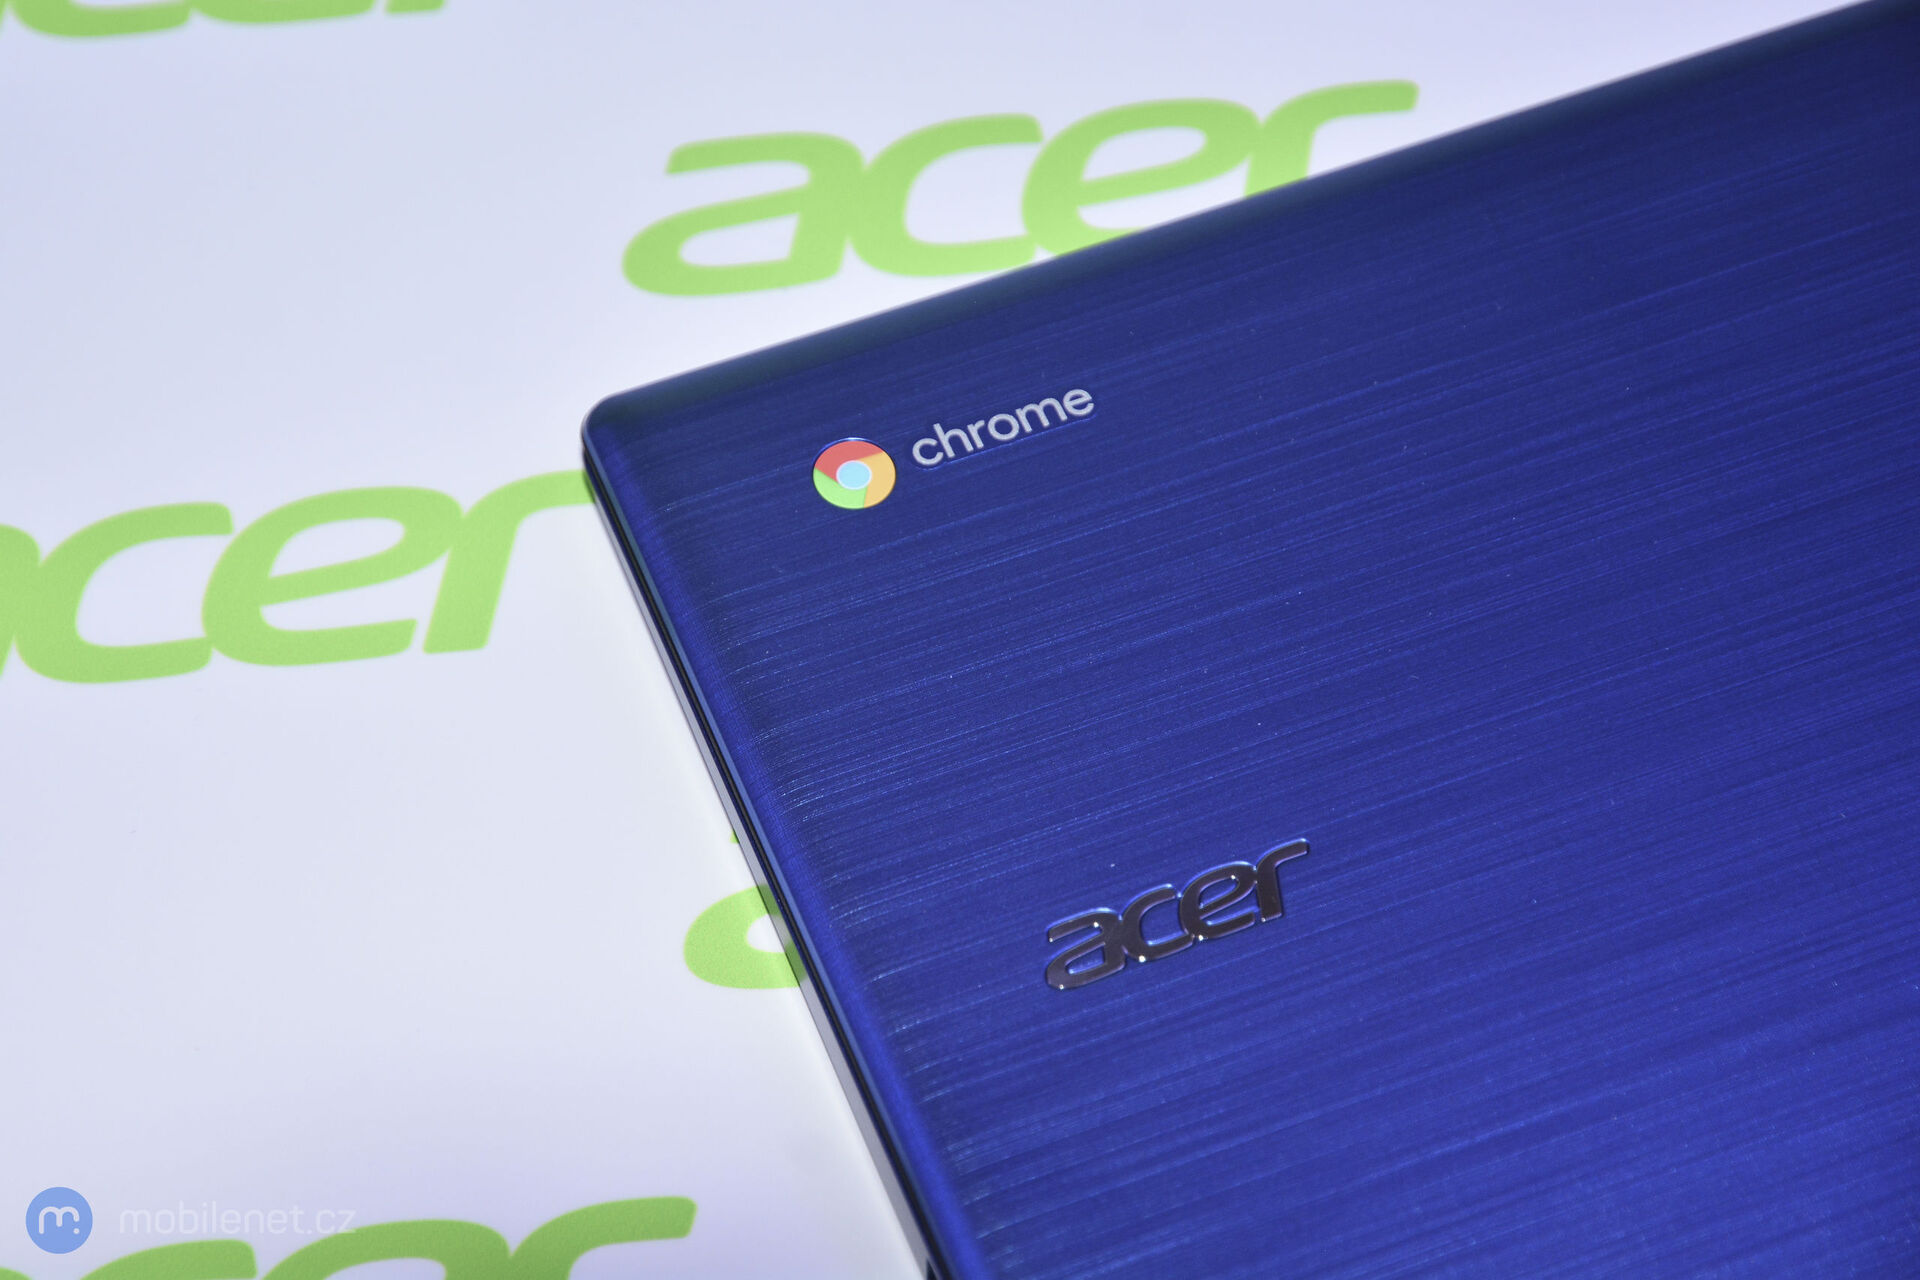 Acer Chromebook 11 (2018)